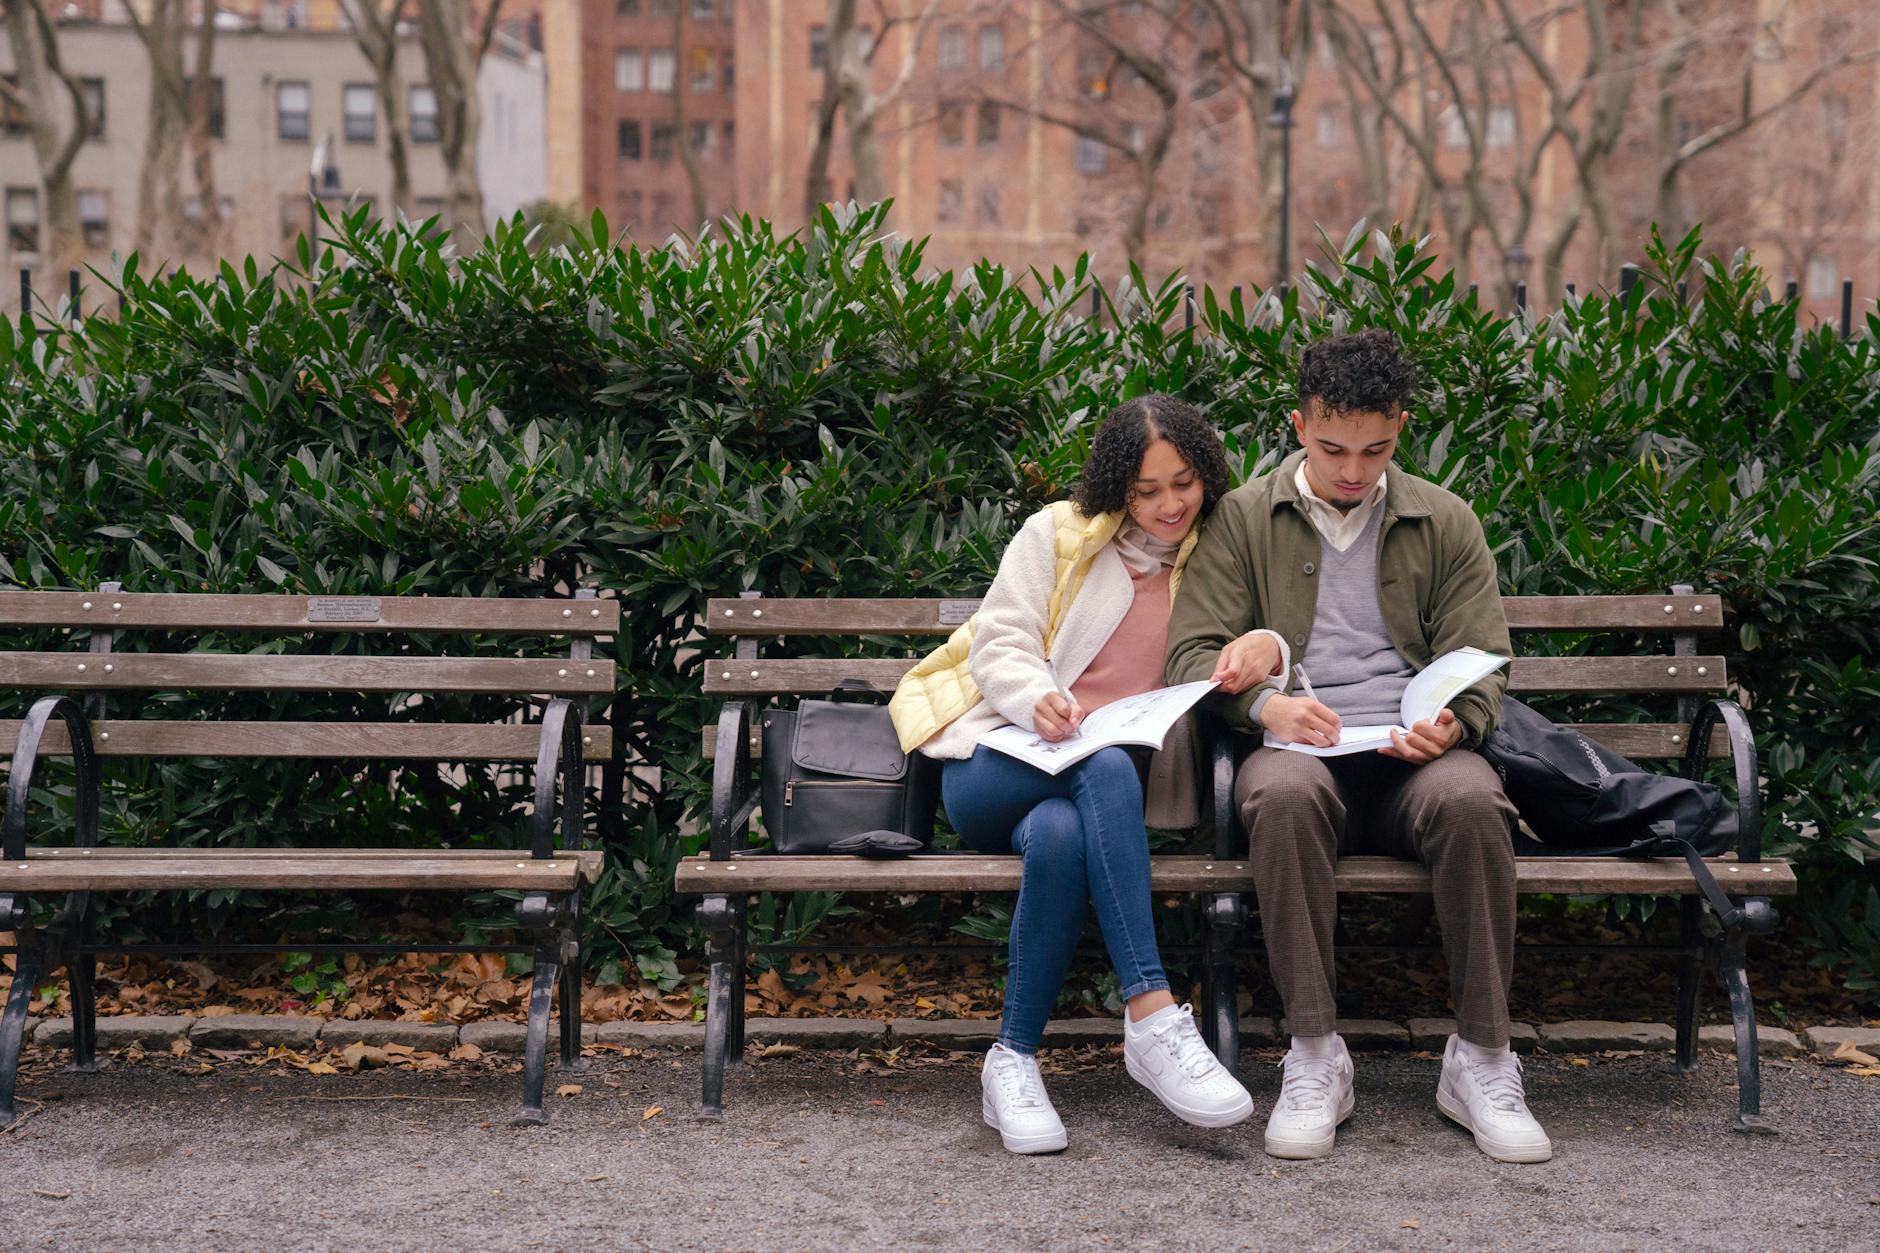 Student couple preparing homework on bench in city park